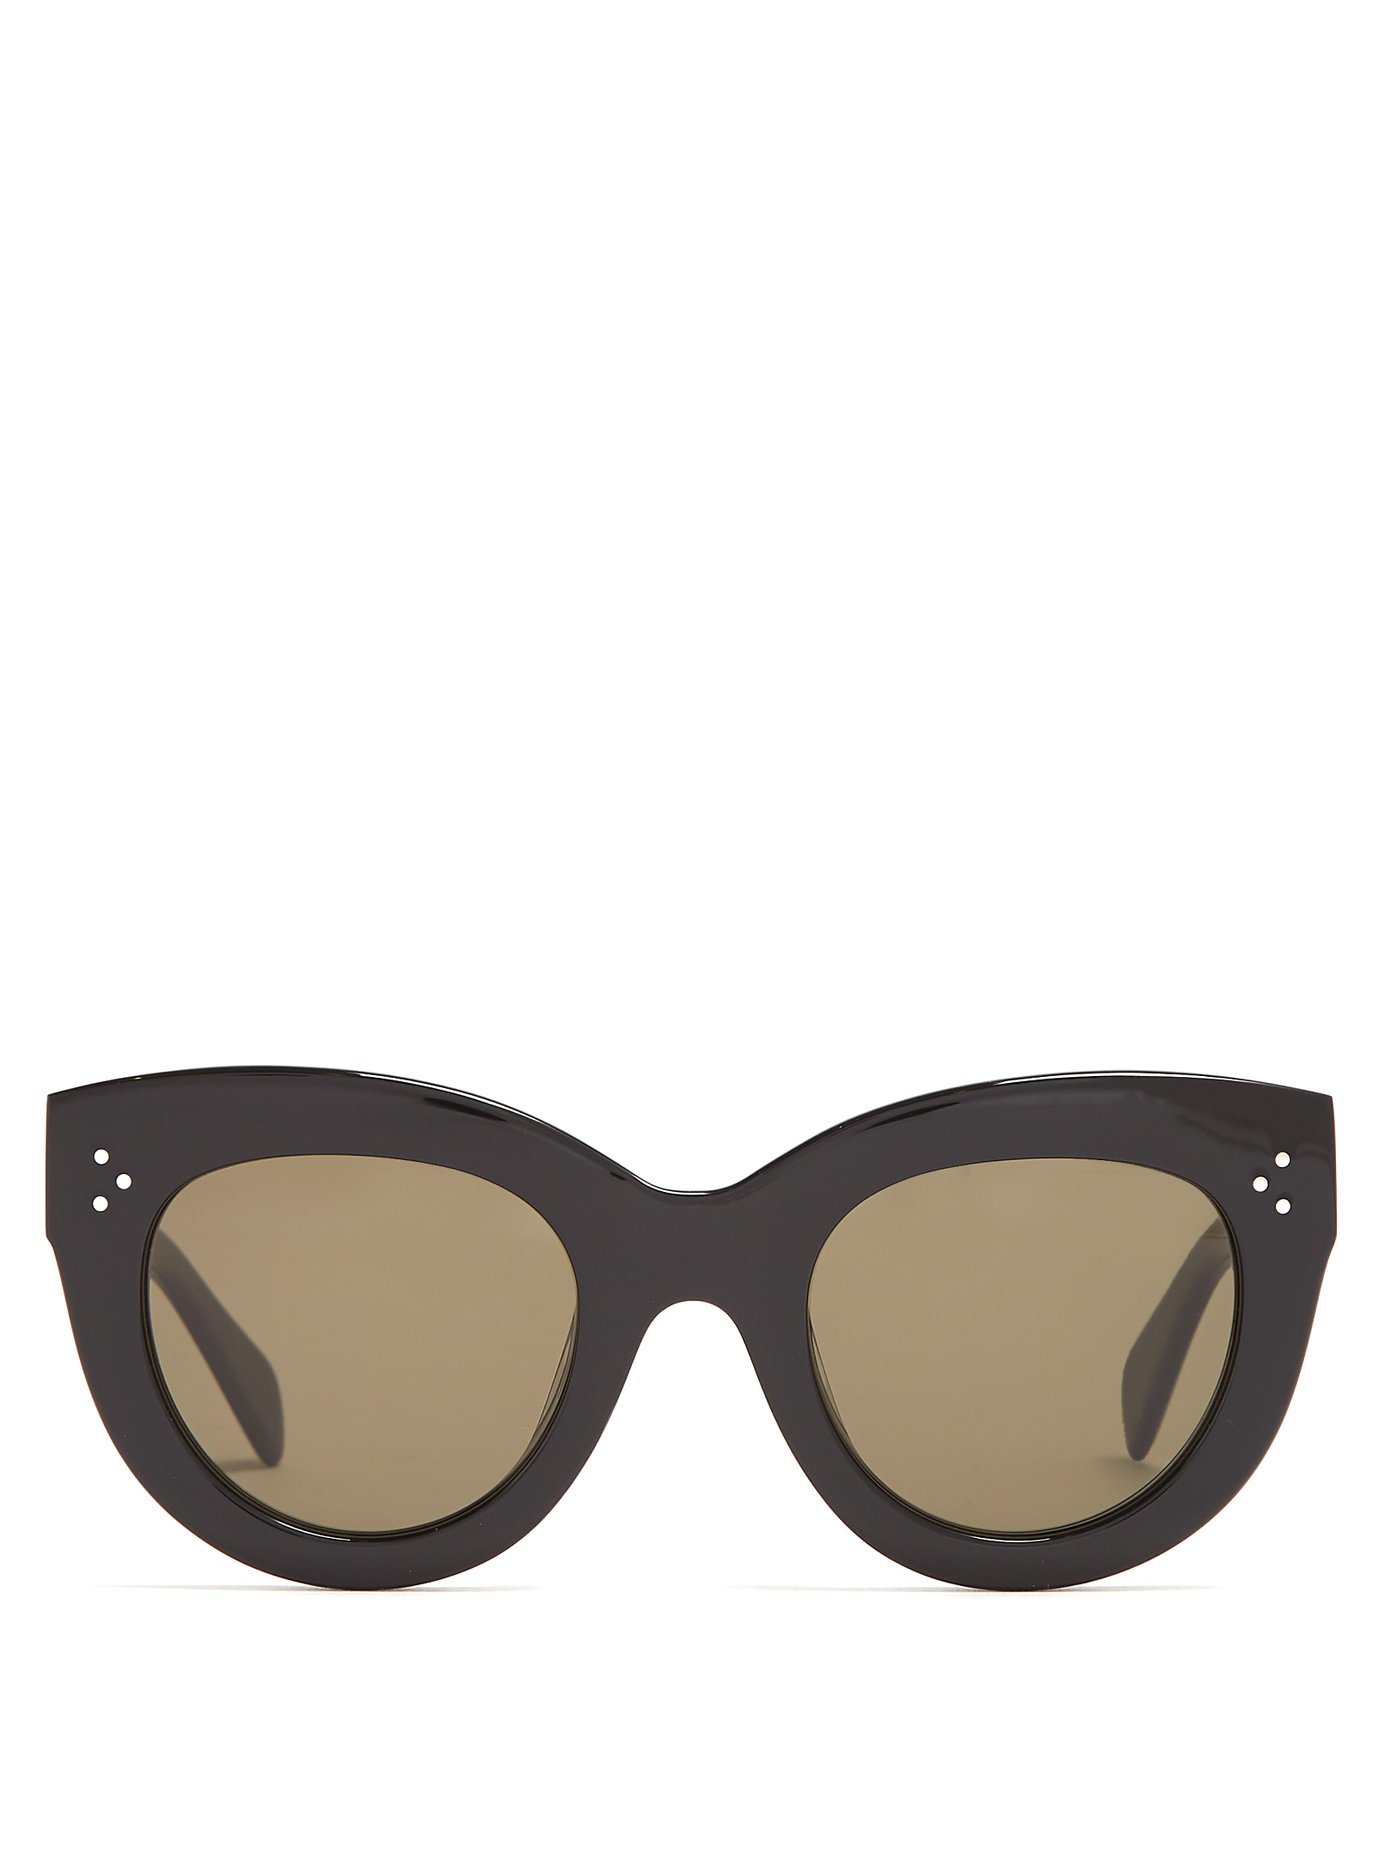 celine caty sunglasses black